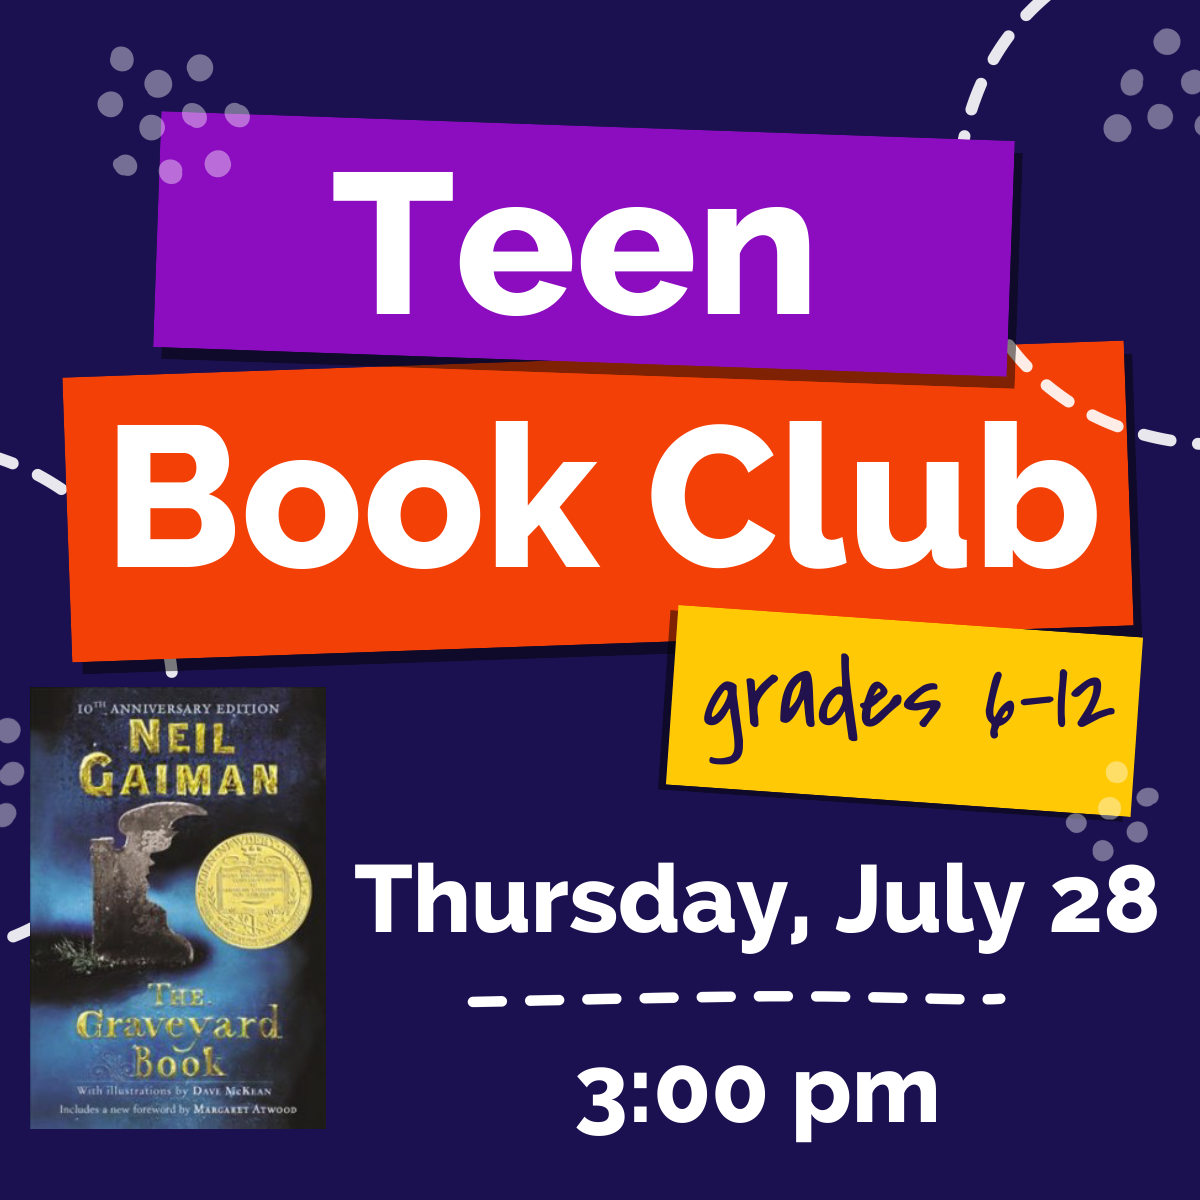 Teen Book Club grades 6-12 Thursday, July 28 3:00pm Graveyard Book